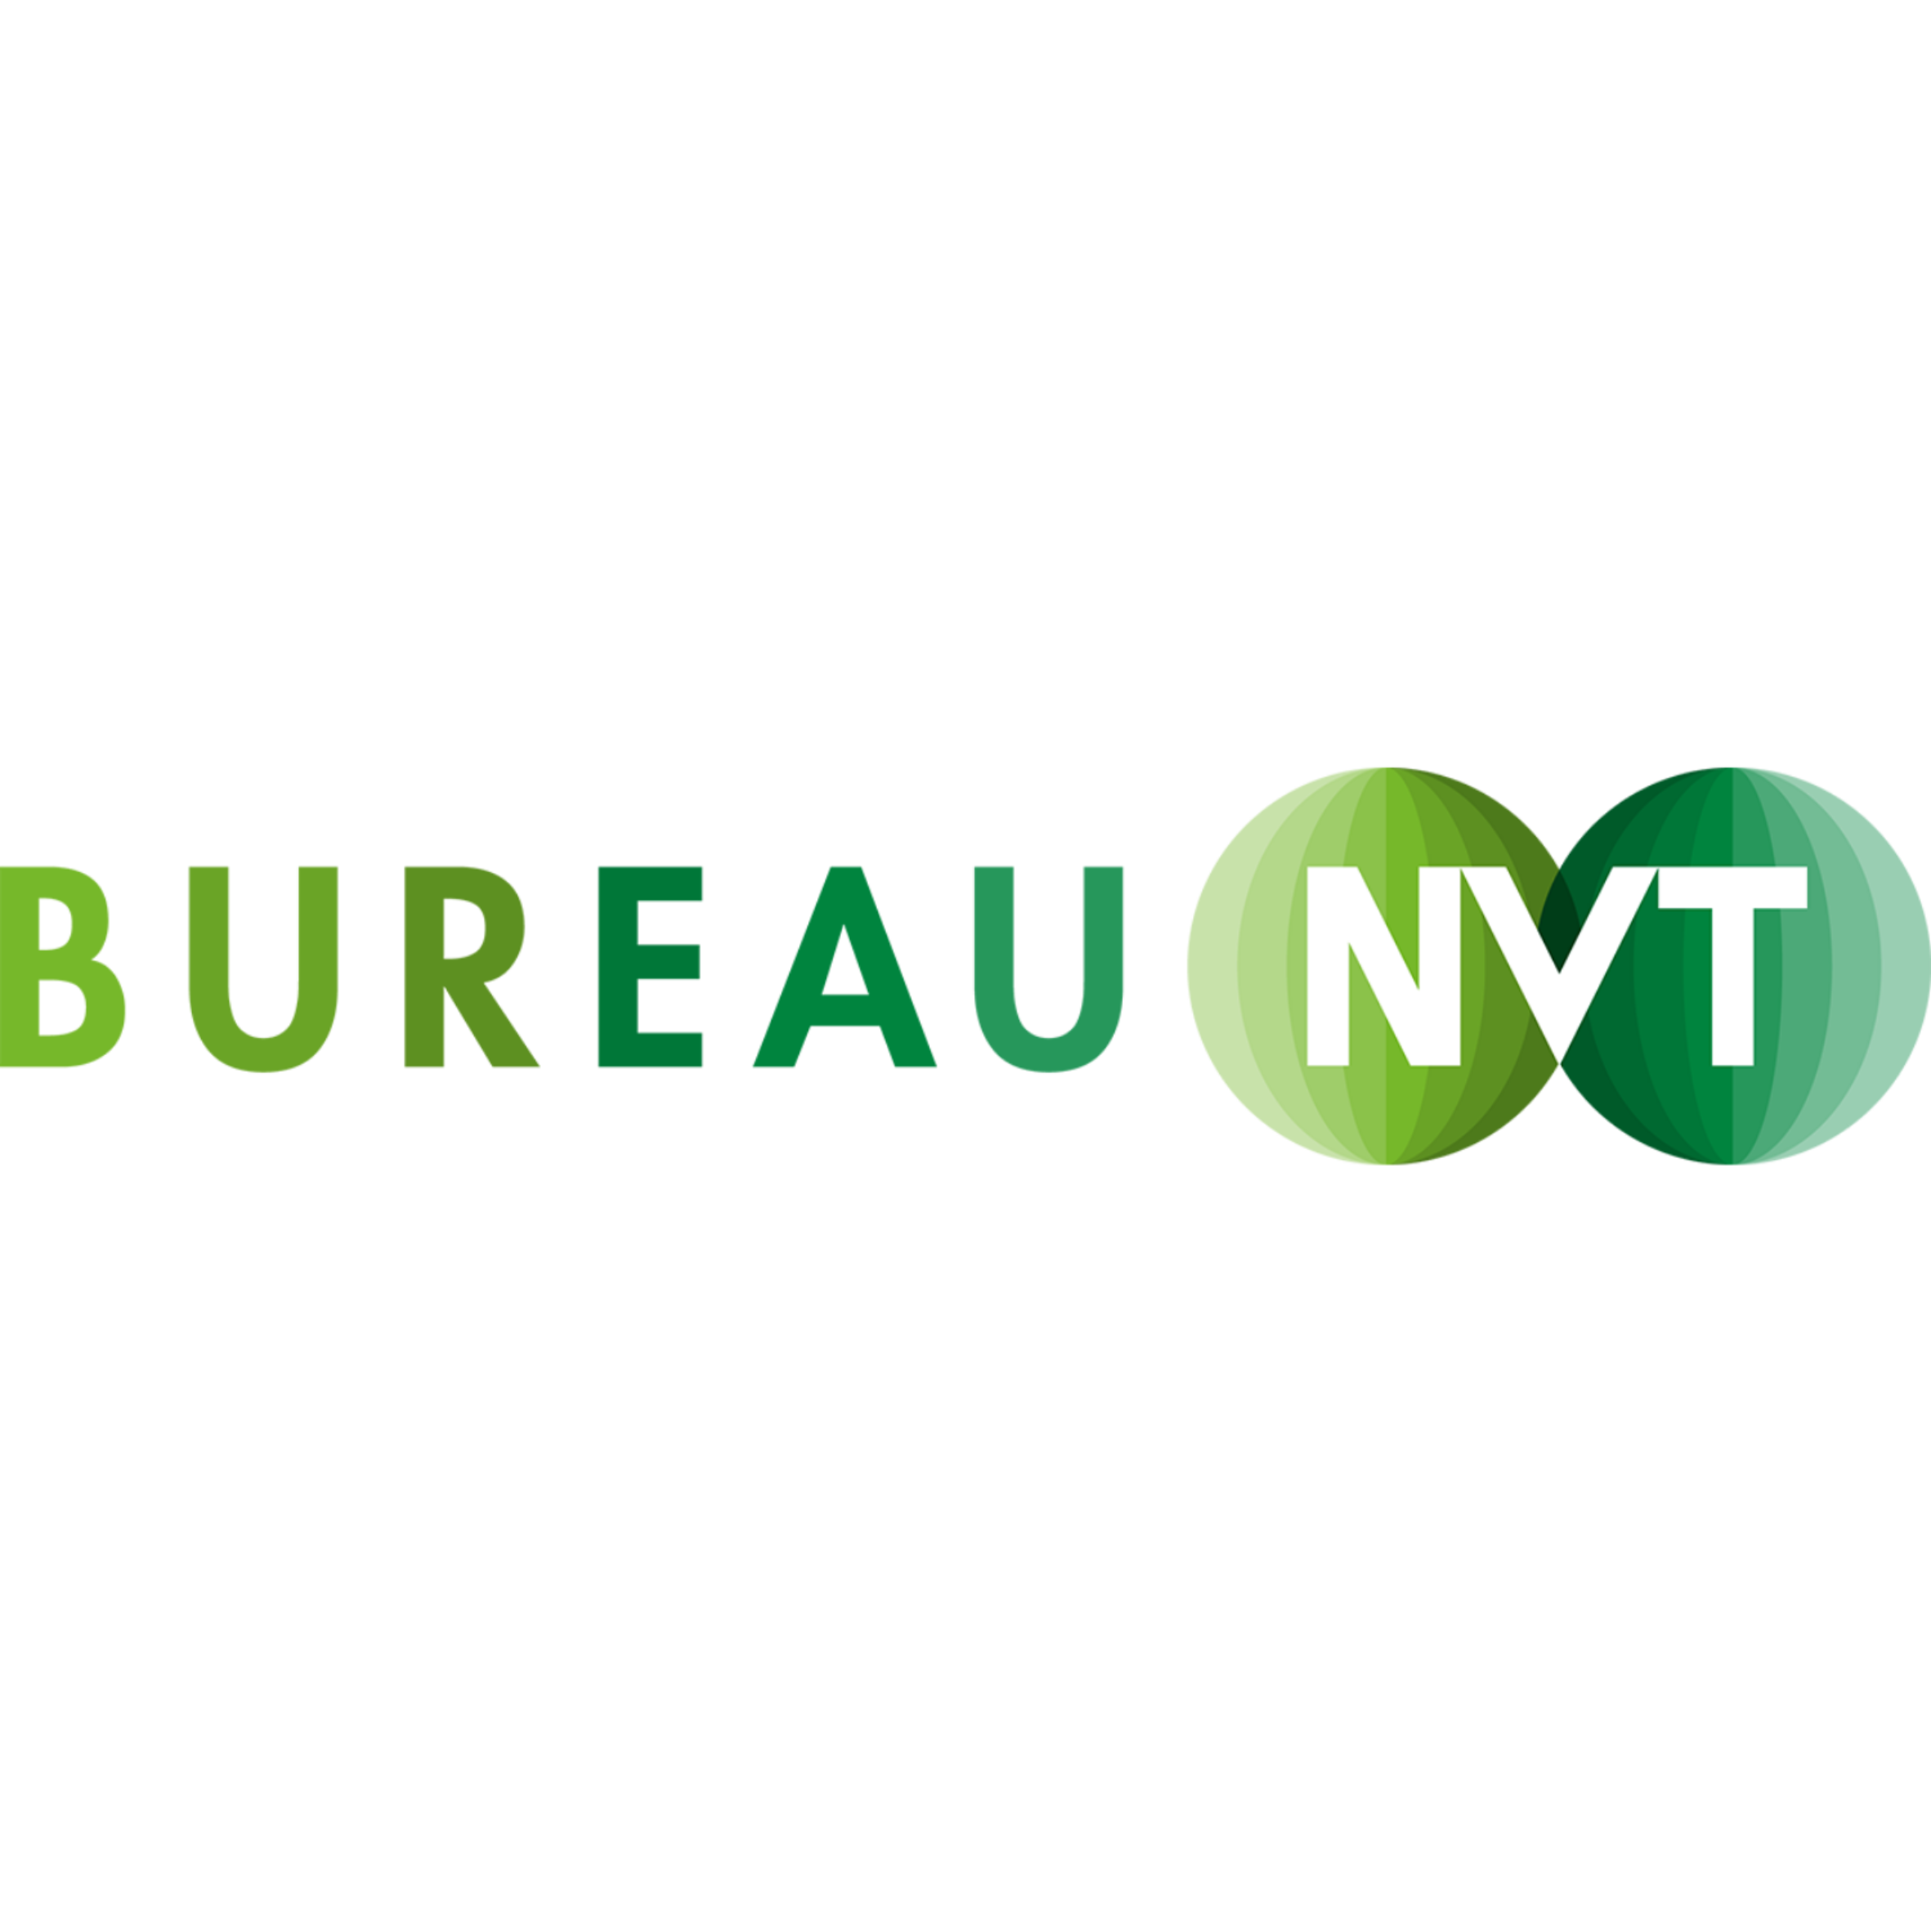 Bureau NVT's logo